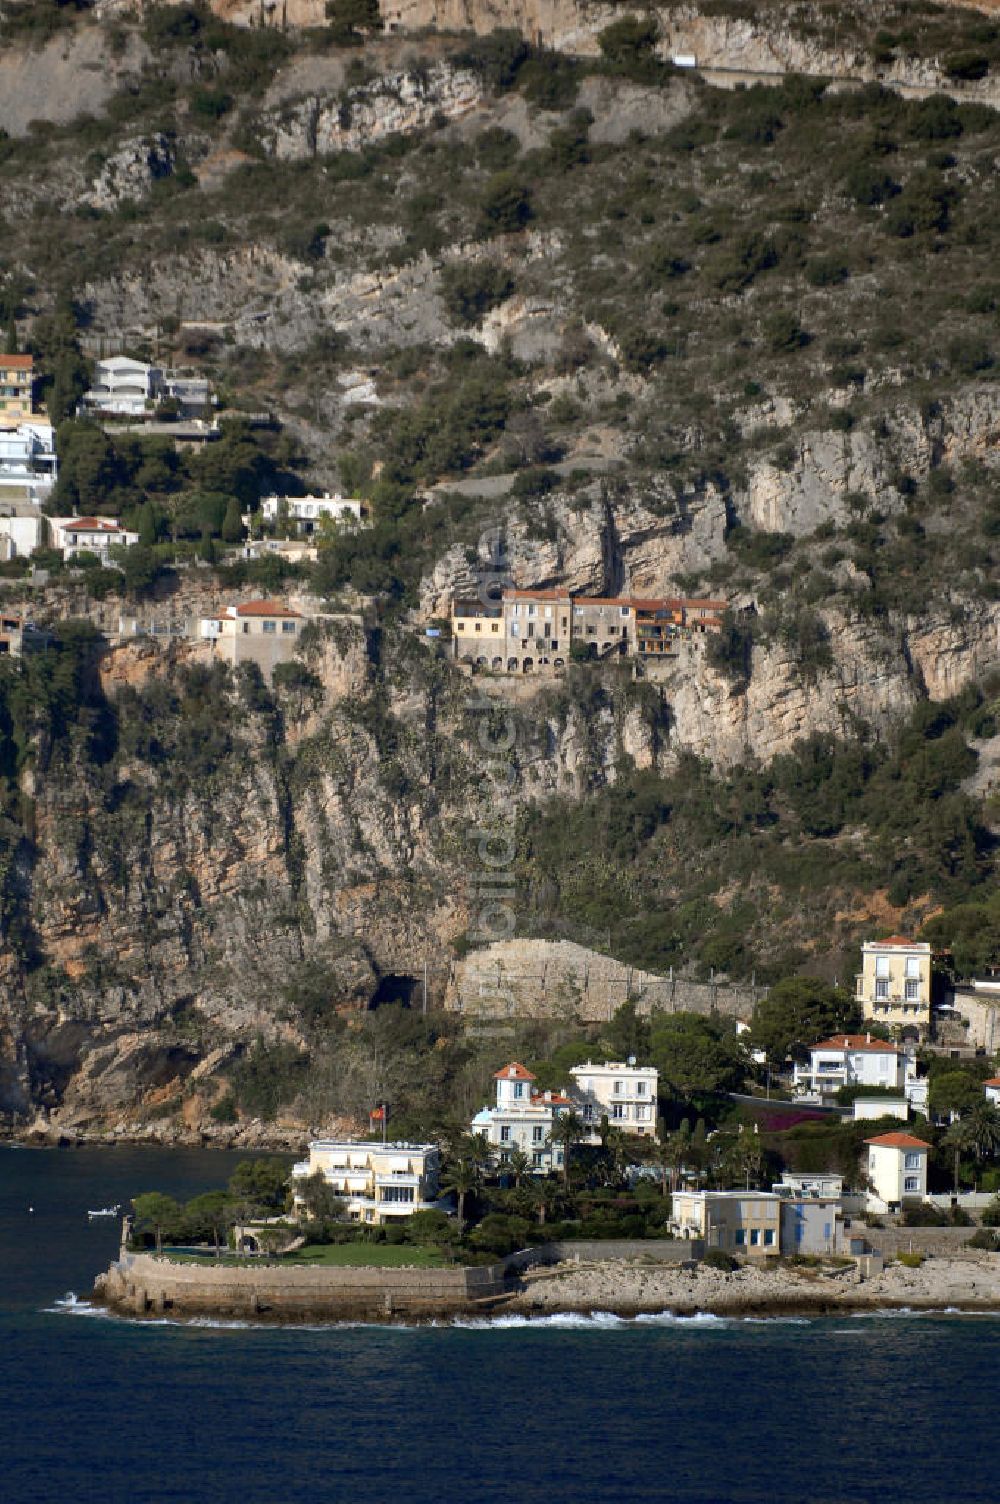 Luftaufnahme Cap-d' Ail - Wohngebiet an der felsigen Küste und der Avenue Raymond Gramaglia in Cap-d' Ail